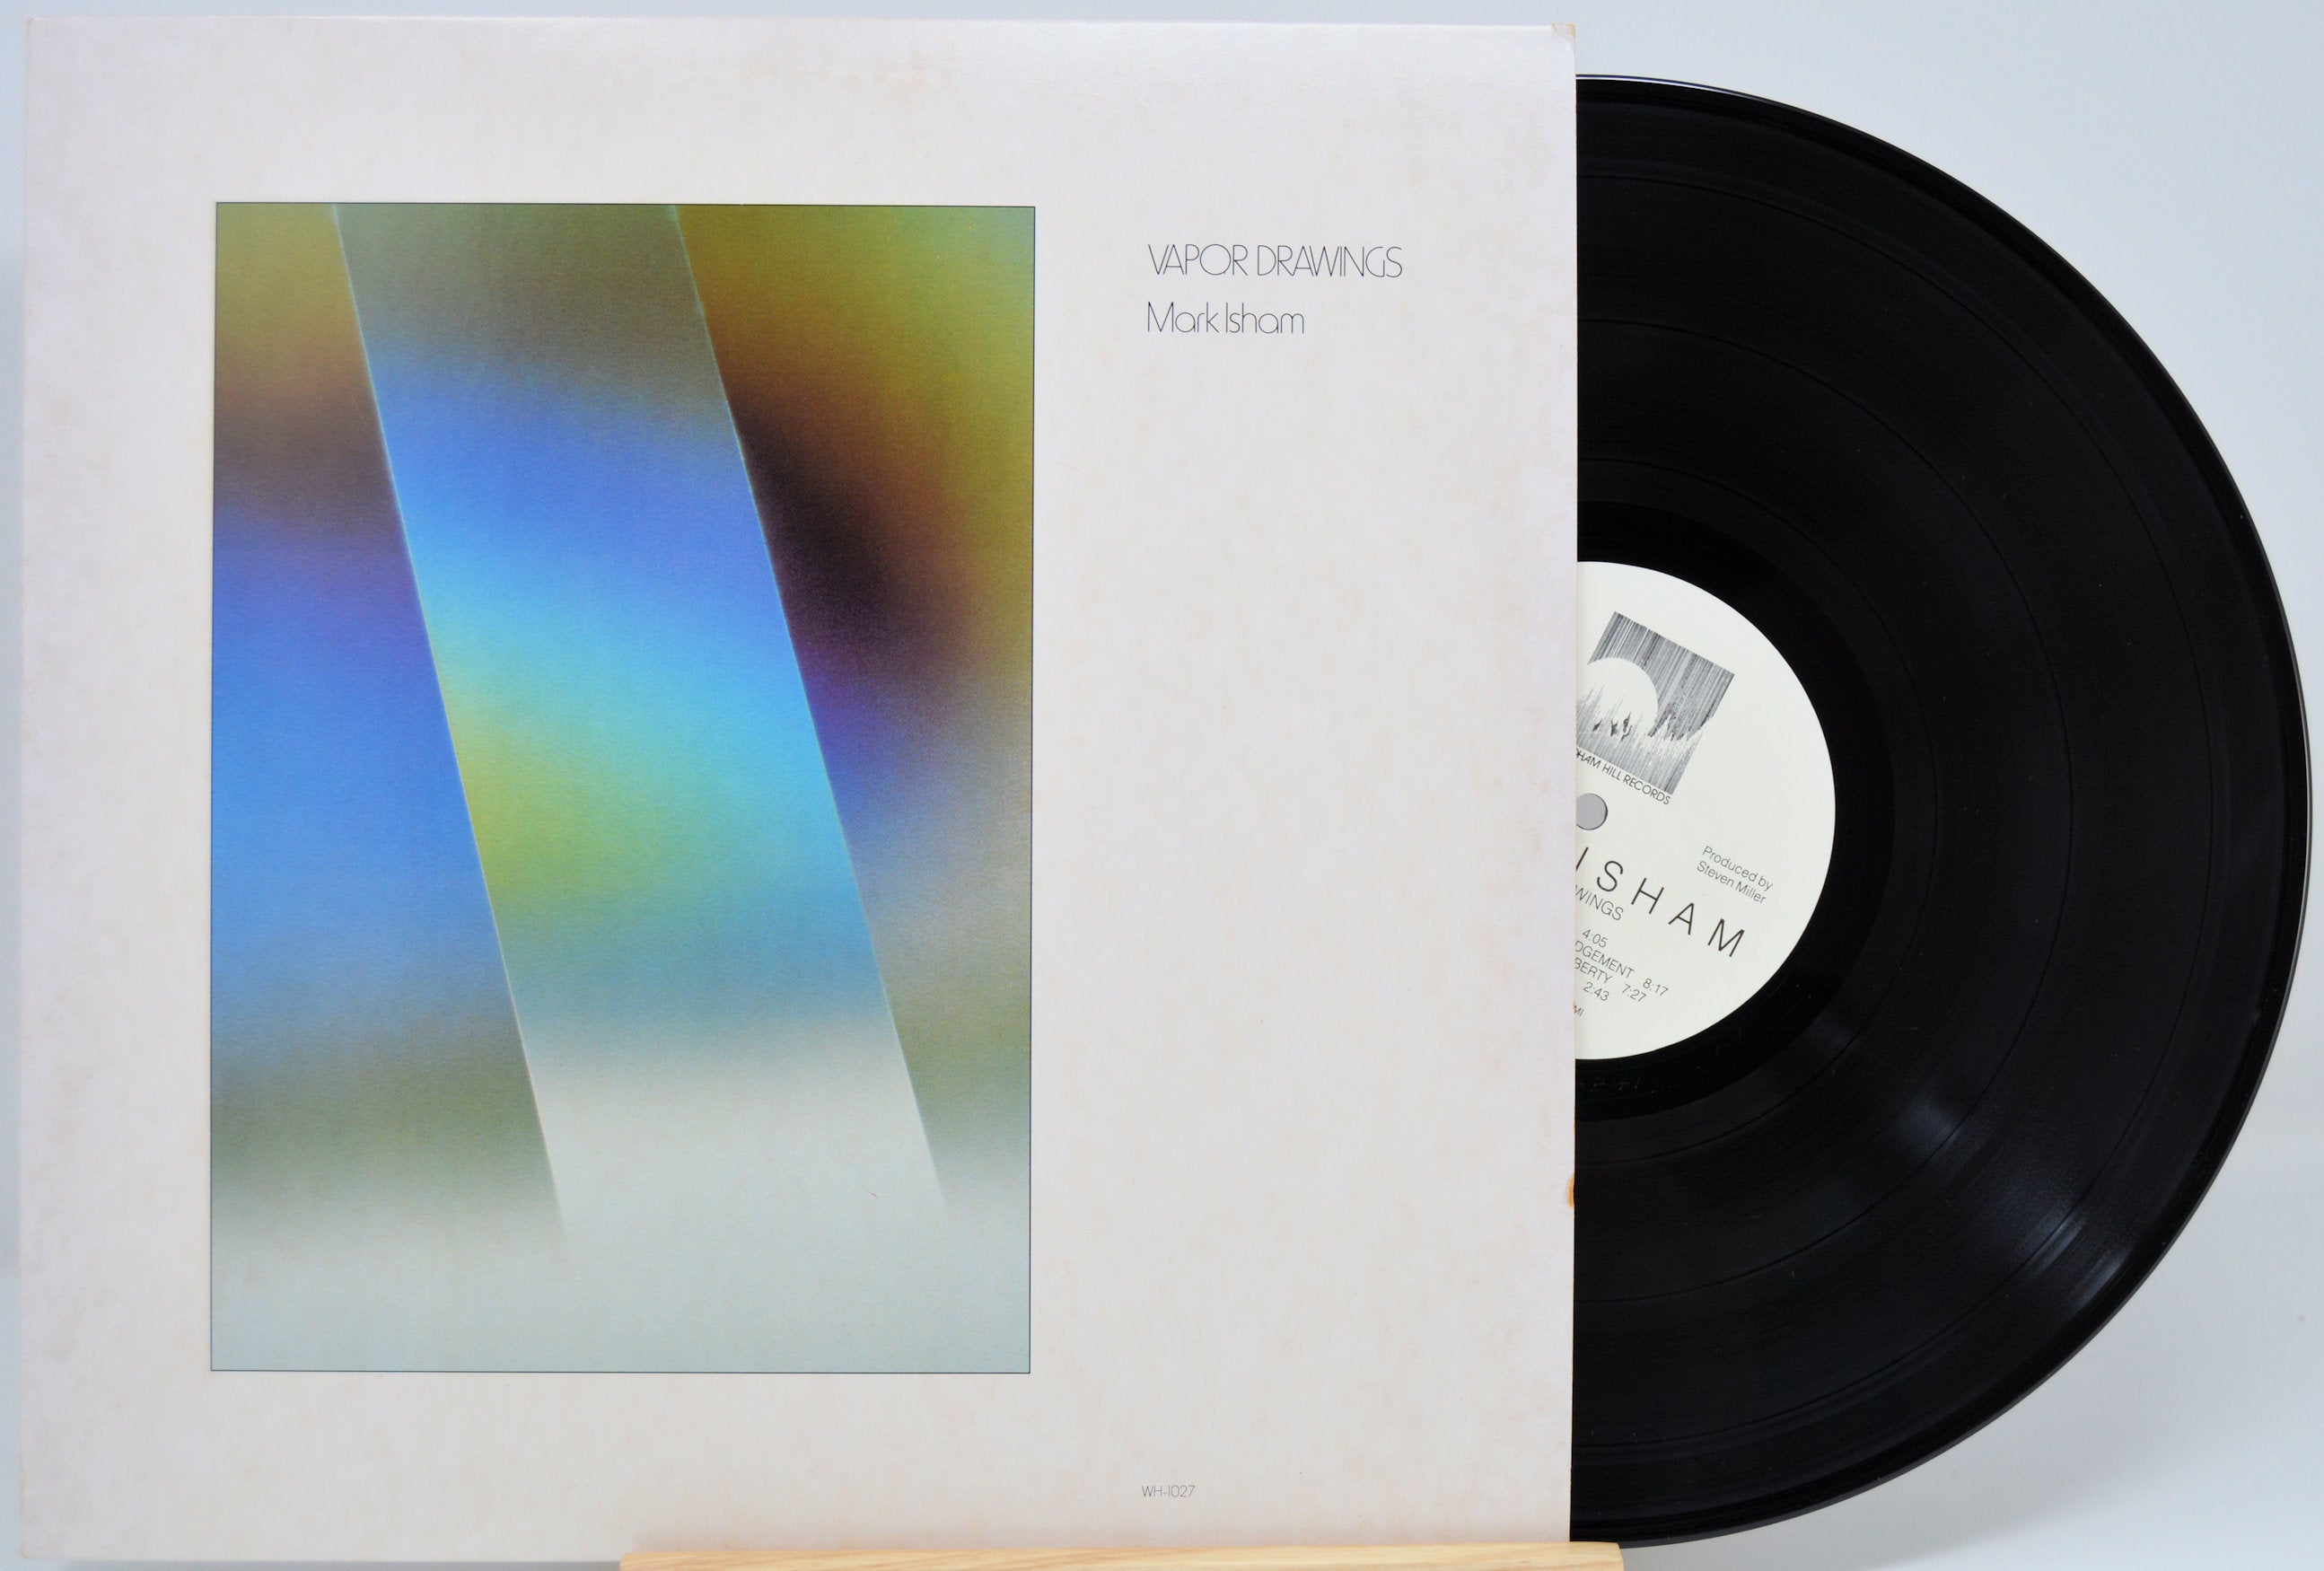 Mark Isham Vapor Drawings, Vinyl Record Album LP, WH1027 Joe's Albums